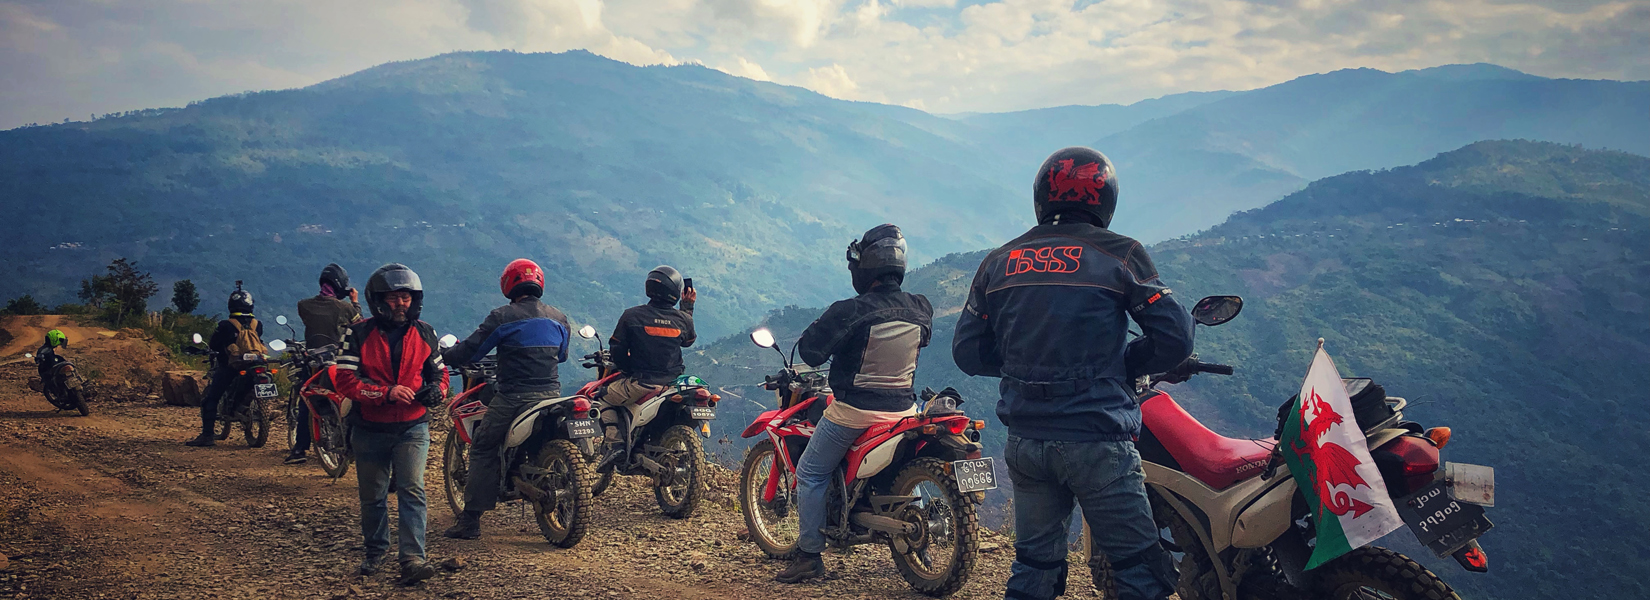 Border Cross Motorbike tour in Myanmar